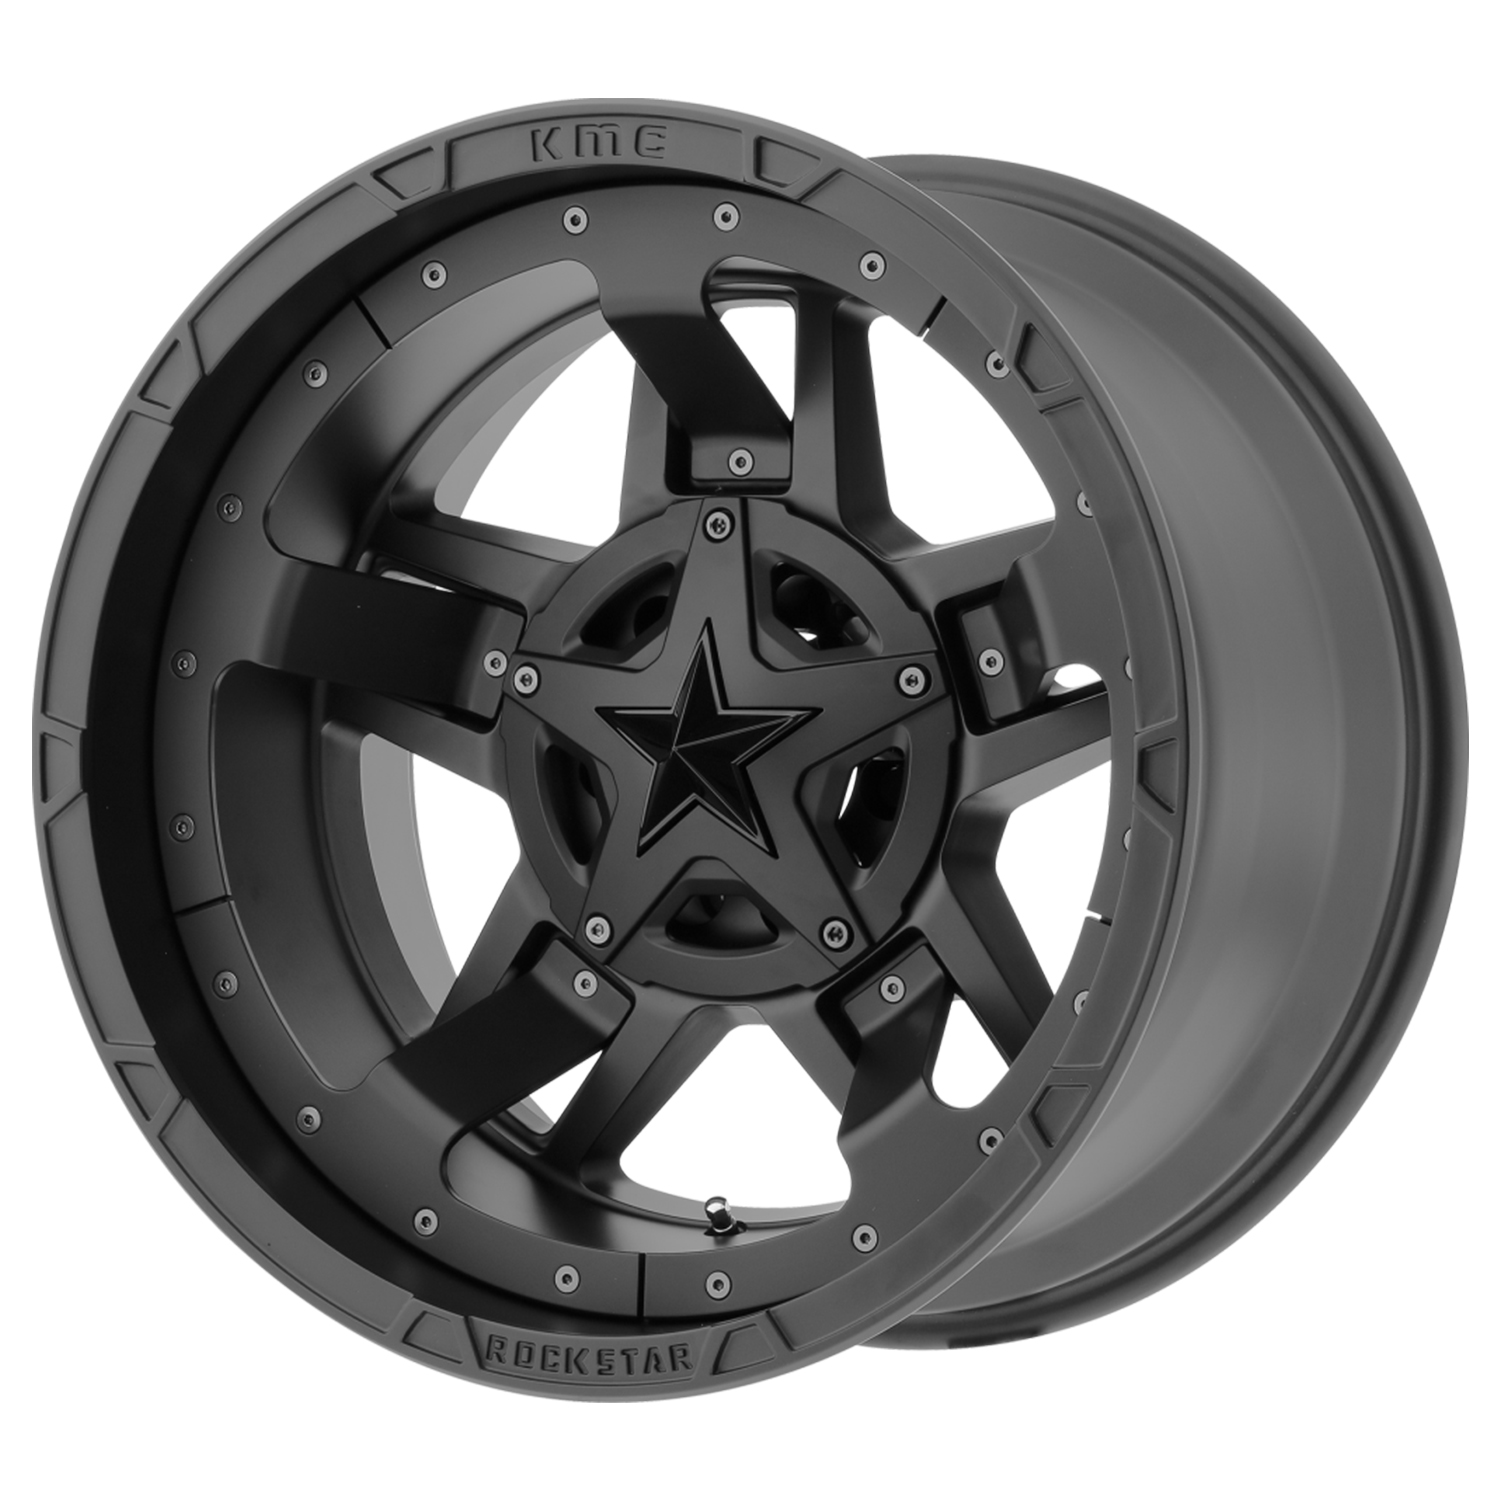 Xd Series Rs3 20x10 5x139.7/5x150 -24et Matte Black wheel